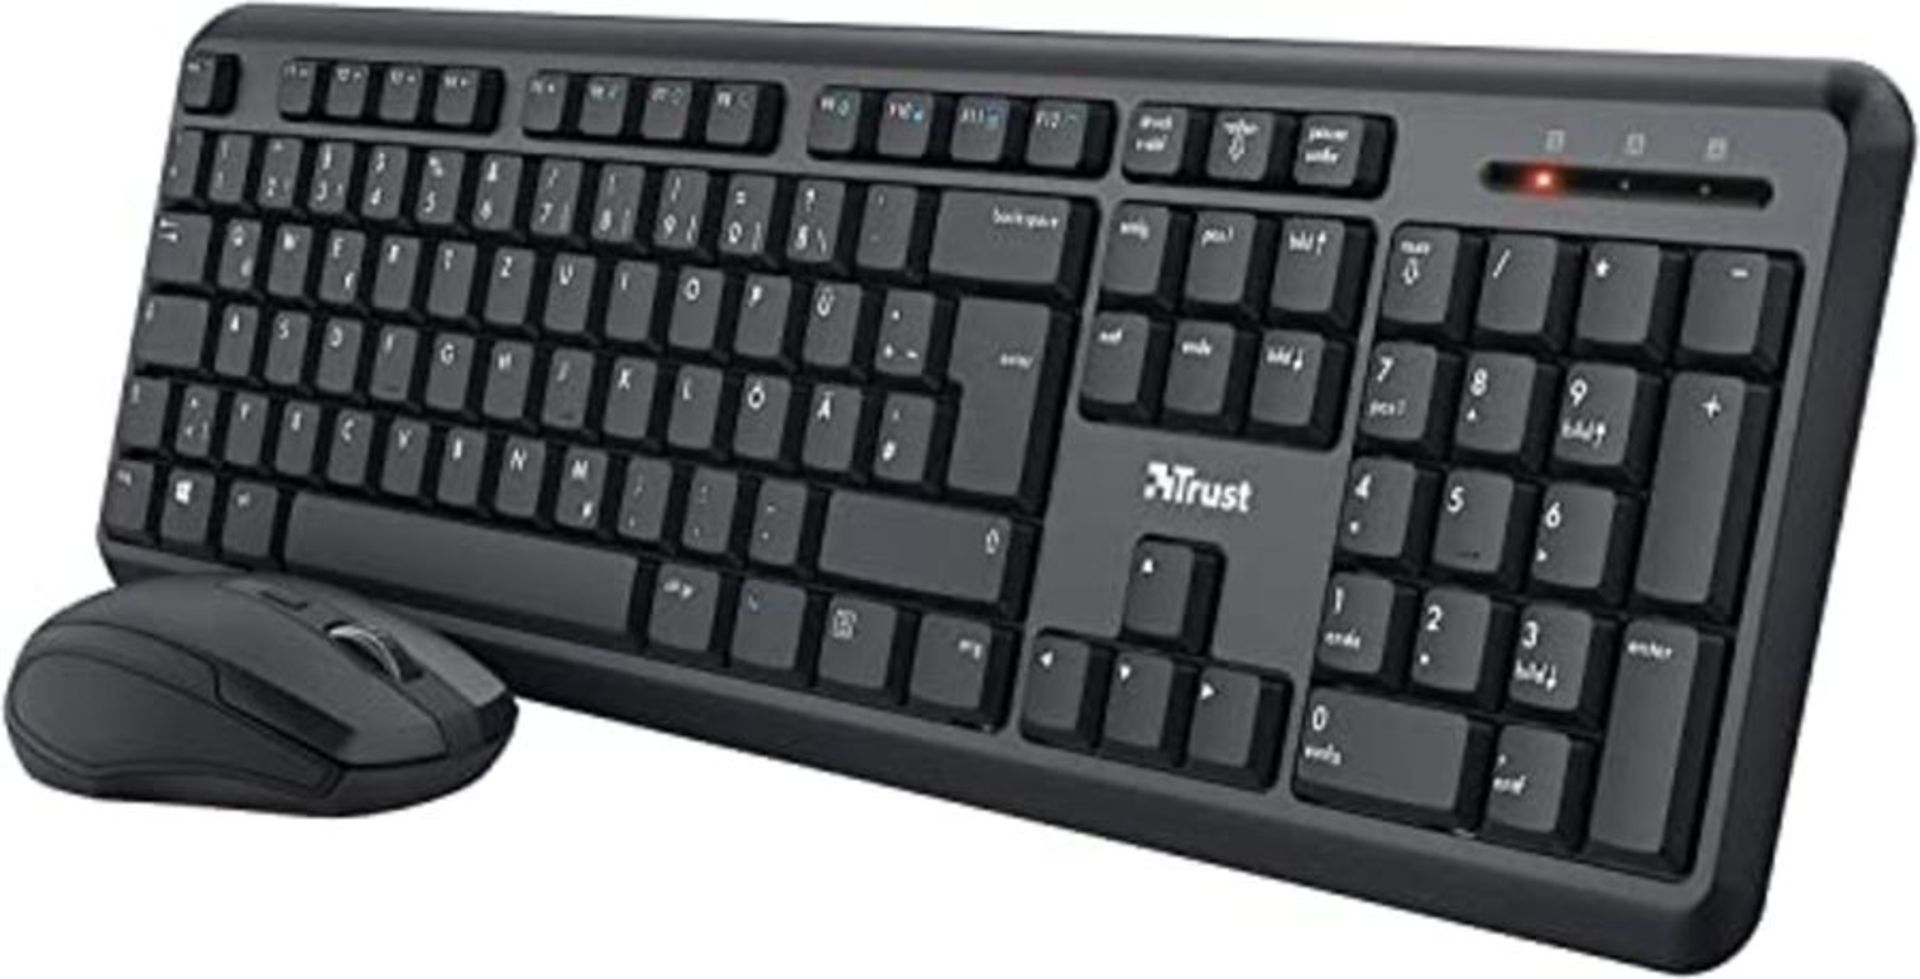 Trust 24080 Ymo Wireless Keyboard Mouse Set - German QWERTZ Layout, Quiet Keys and Mou